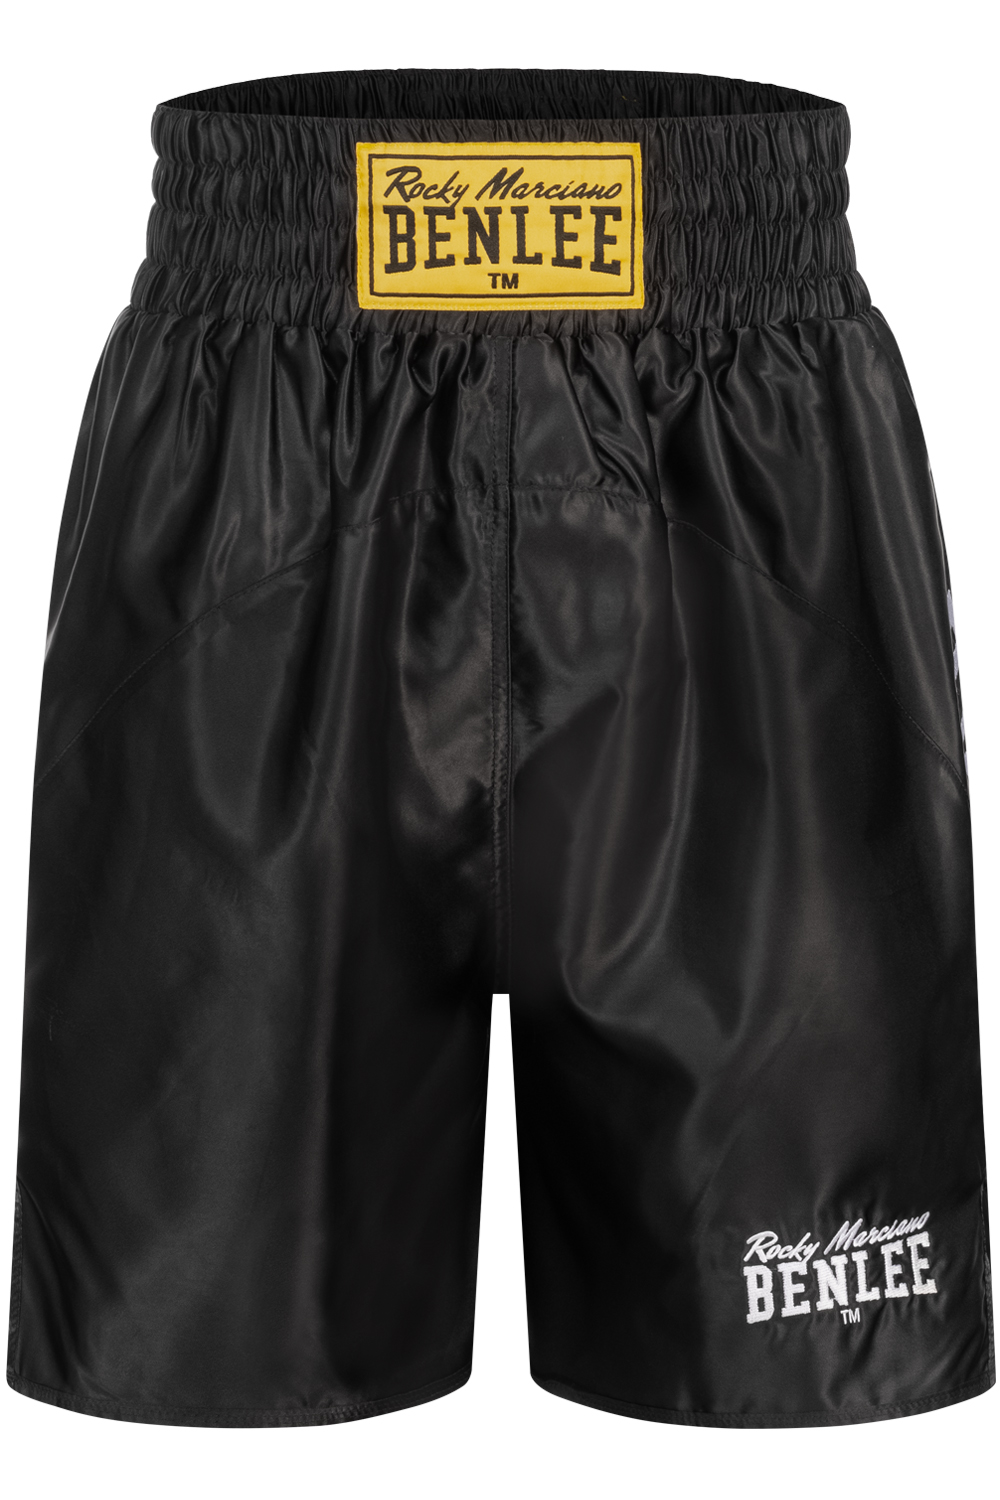 Levně Lonsdale Men's boxing trunks